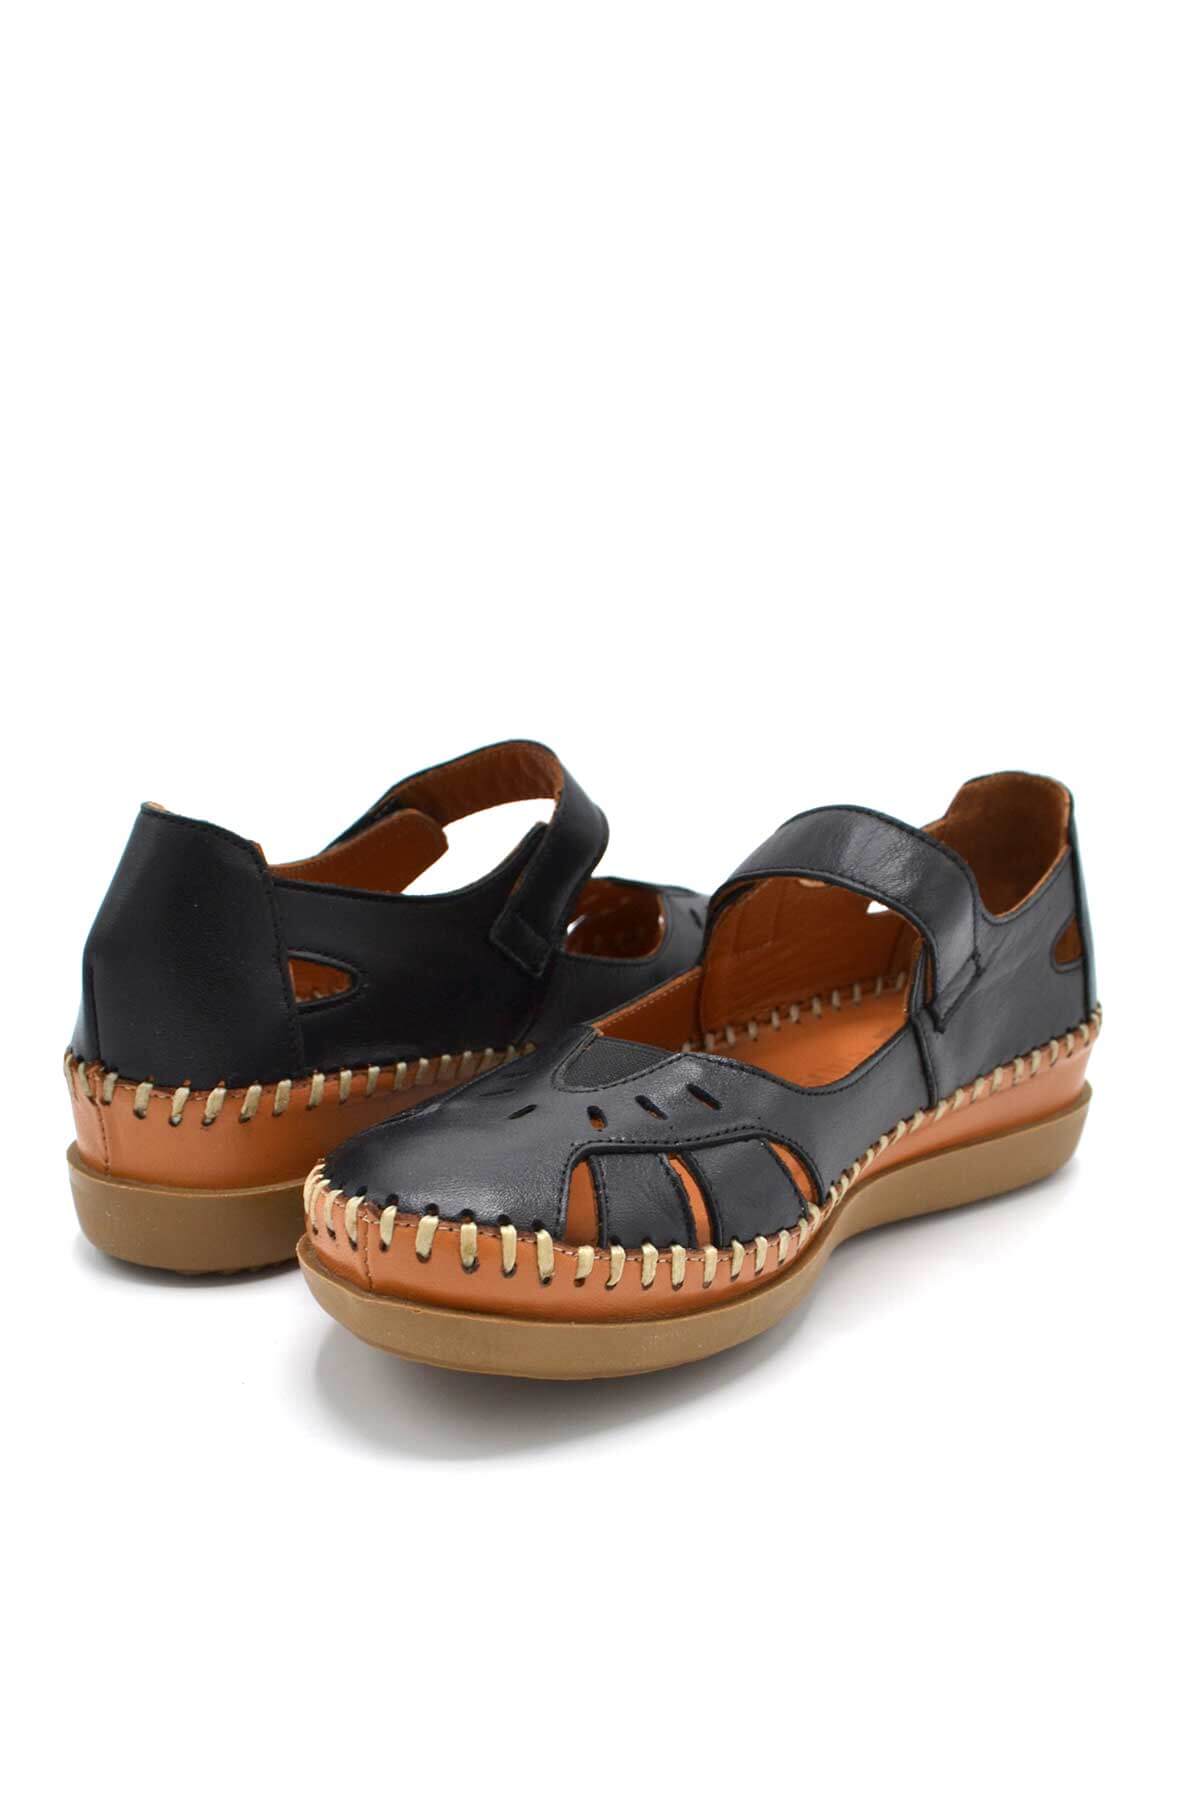 Kadın Comfort Deri Sandalet Siyah 22793524 - Thumbnail